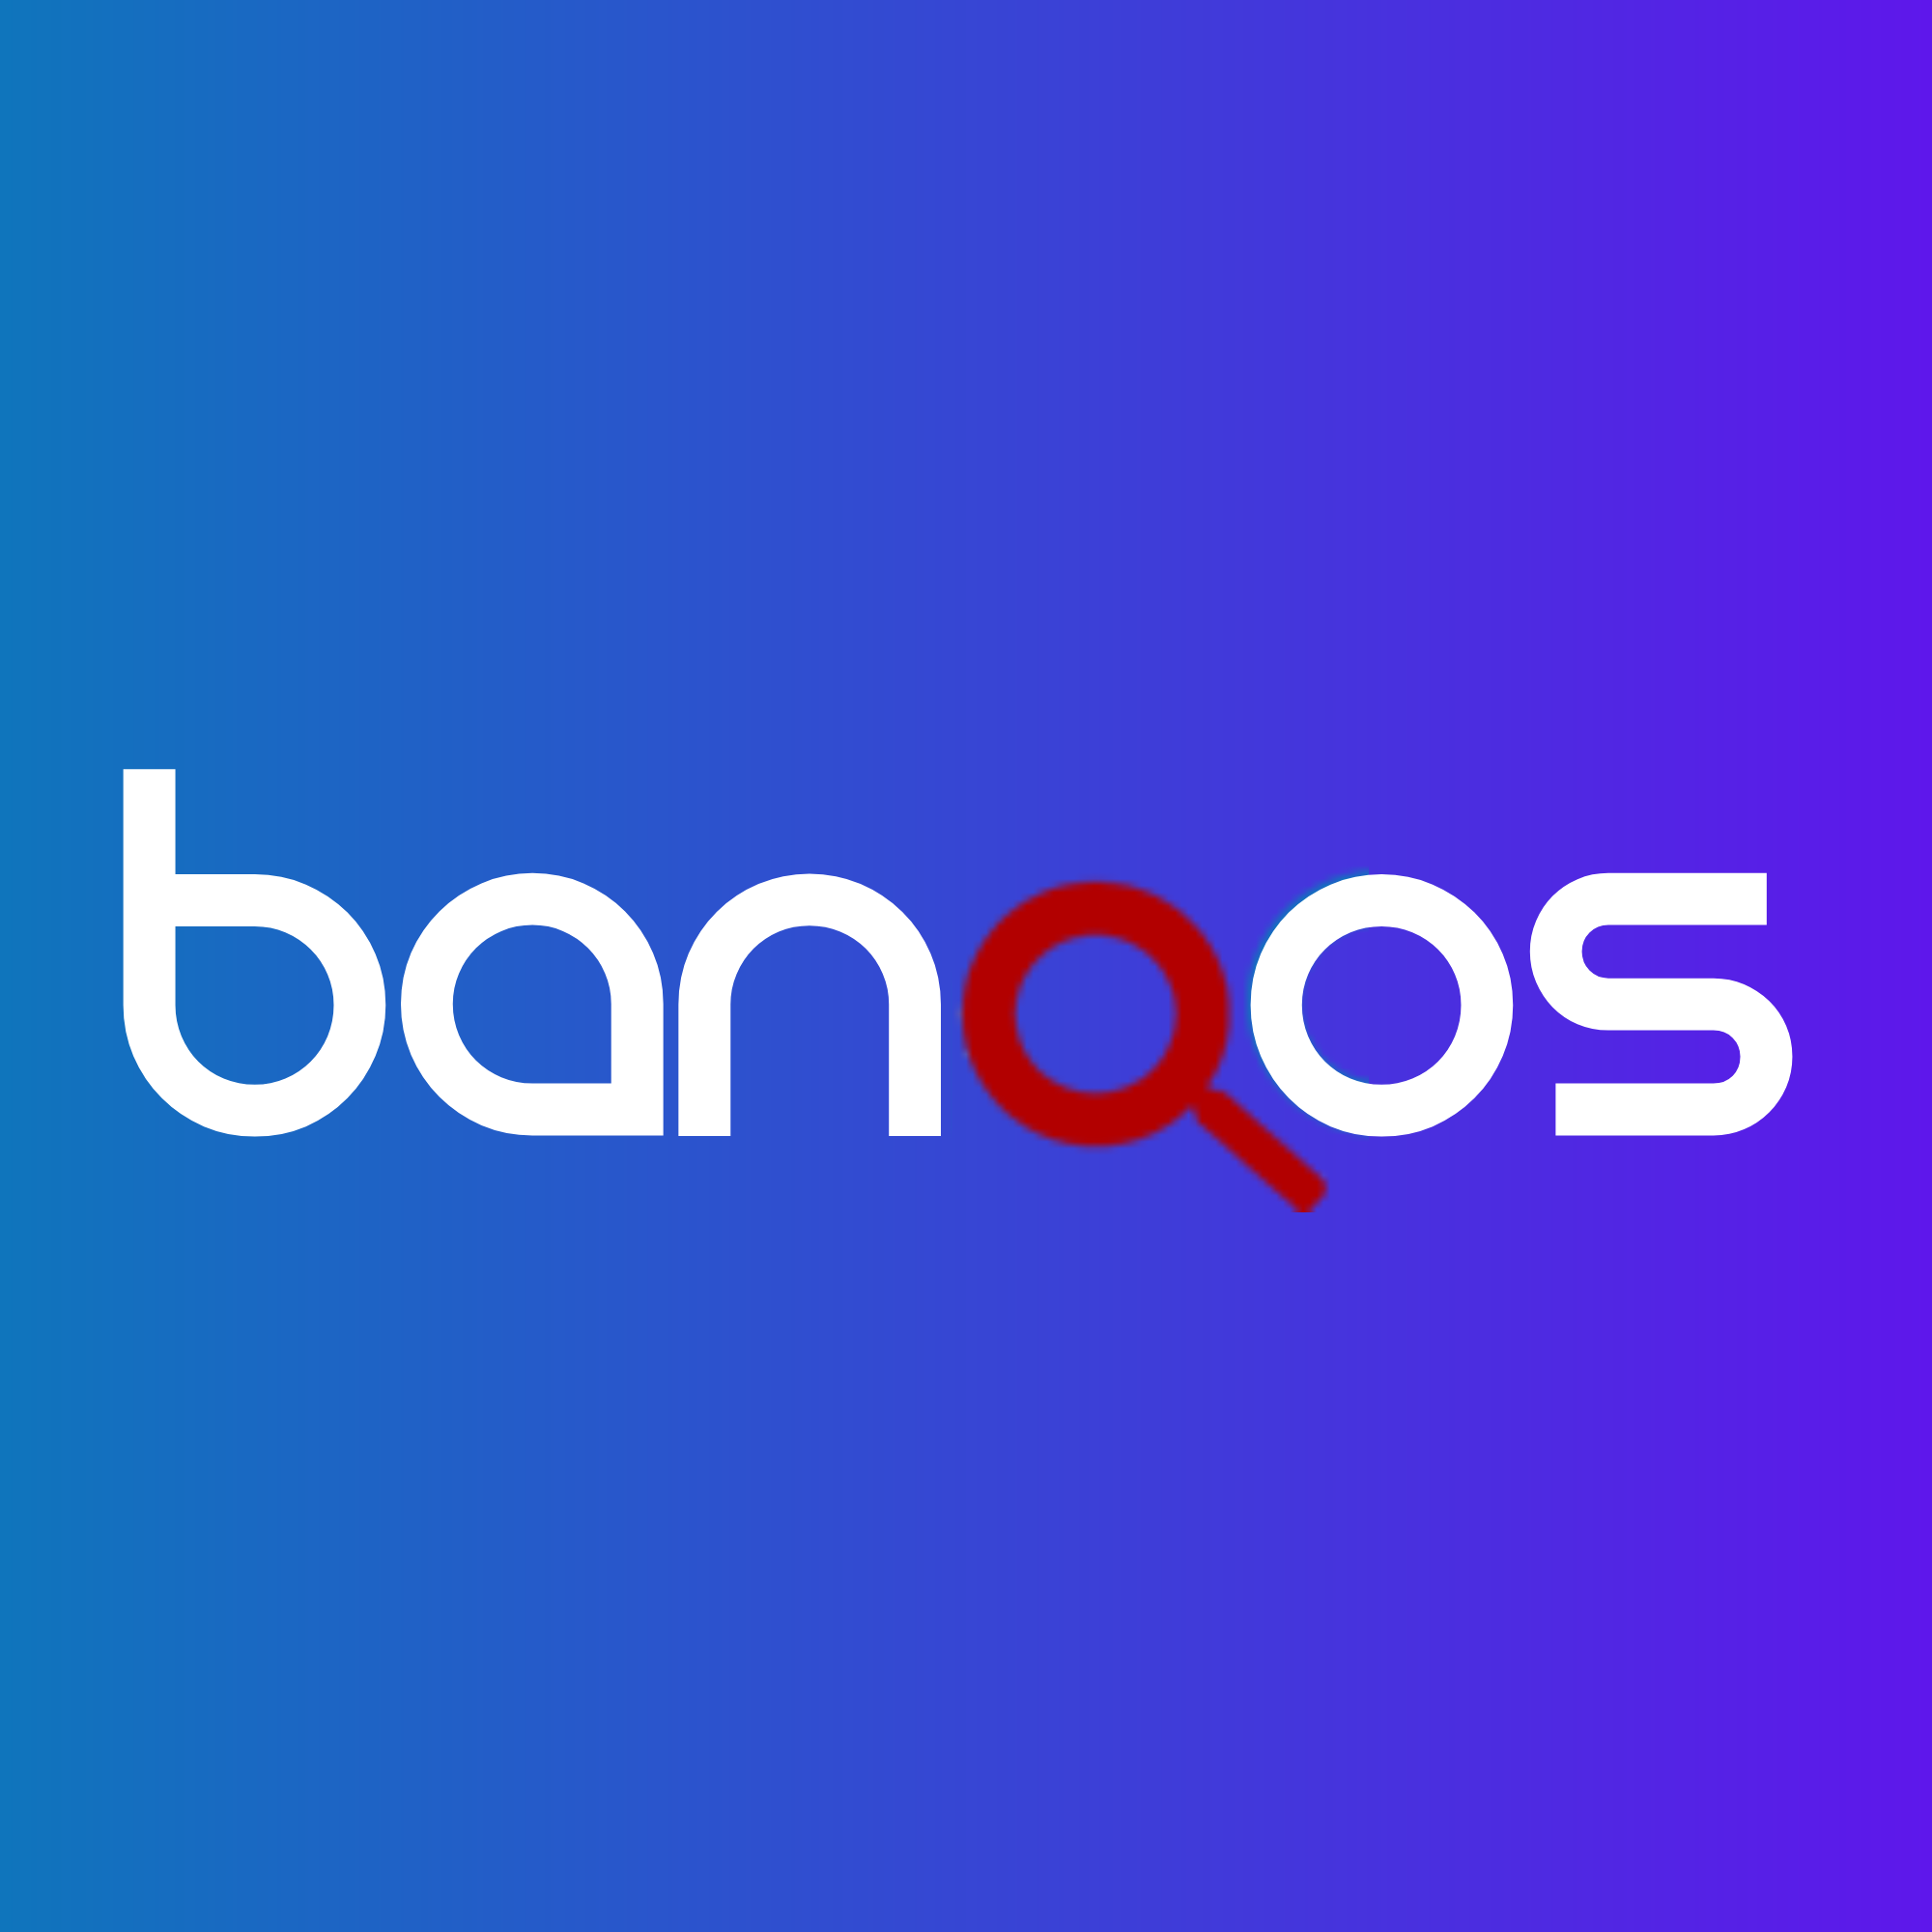 (c) Banqos.com